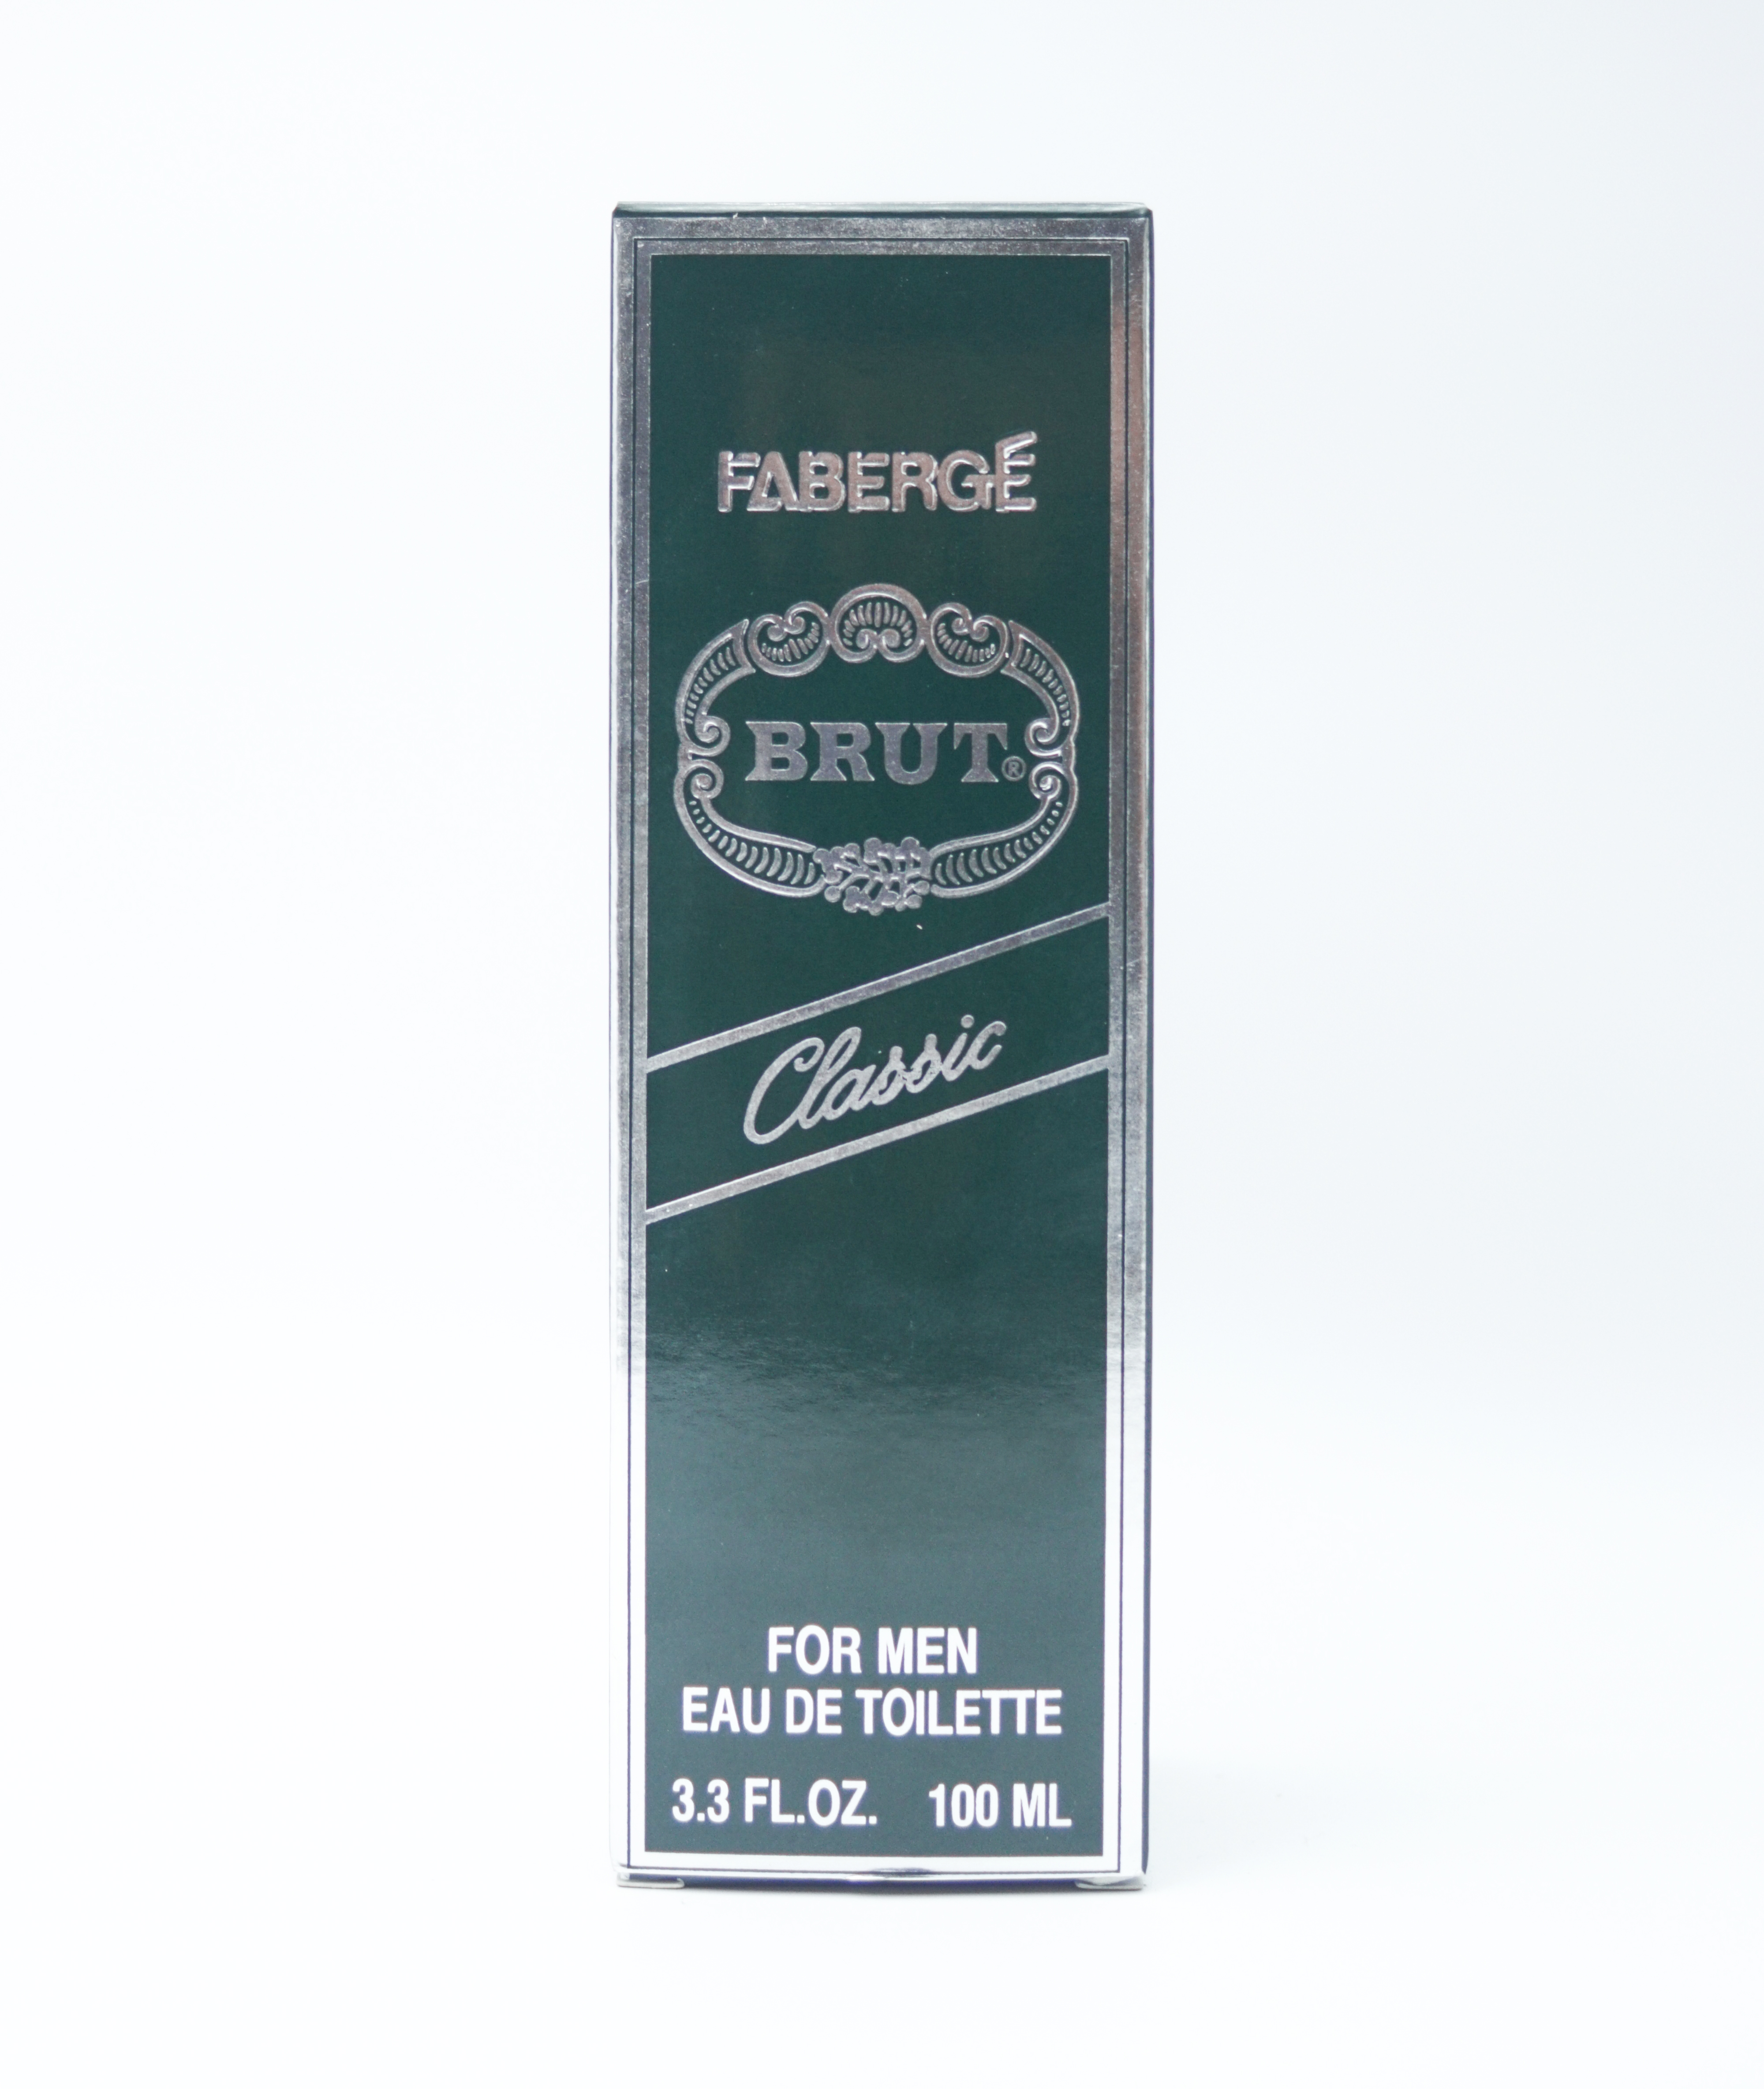 Faberge Brut Classic Original 100 ml Eau De Toilette Perfume For Men SKU 96828